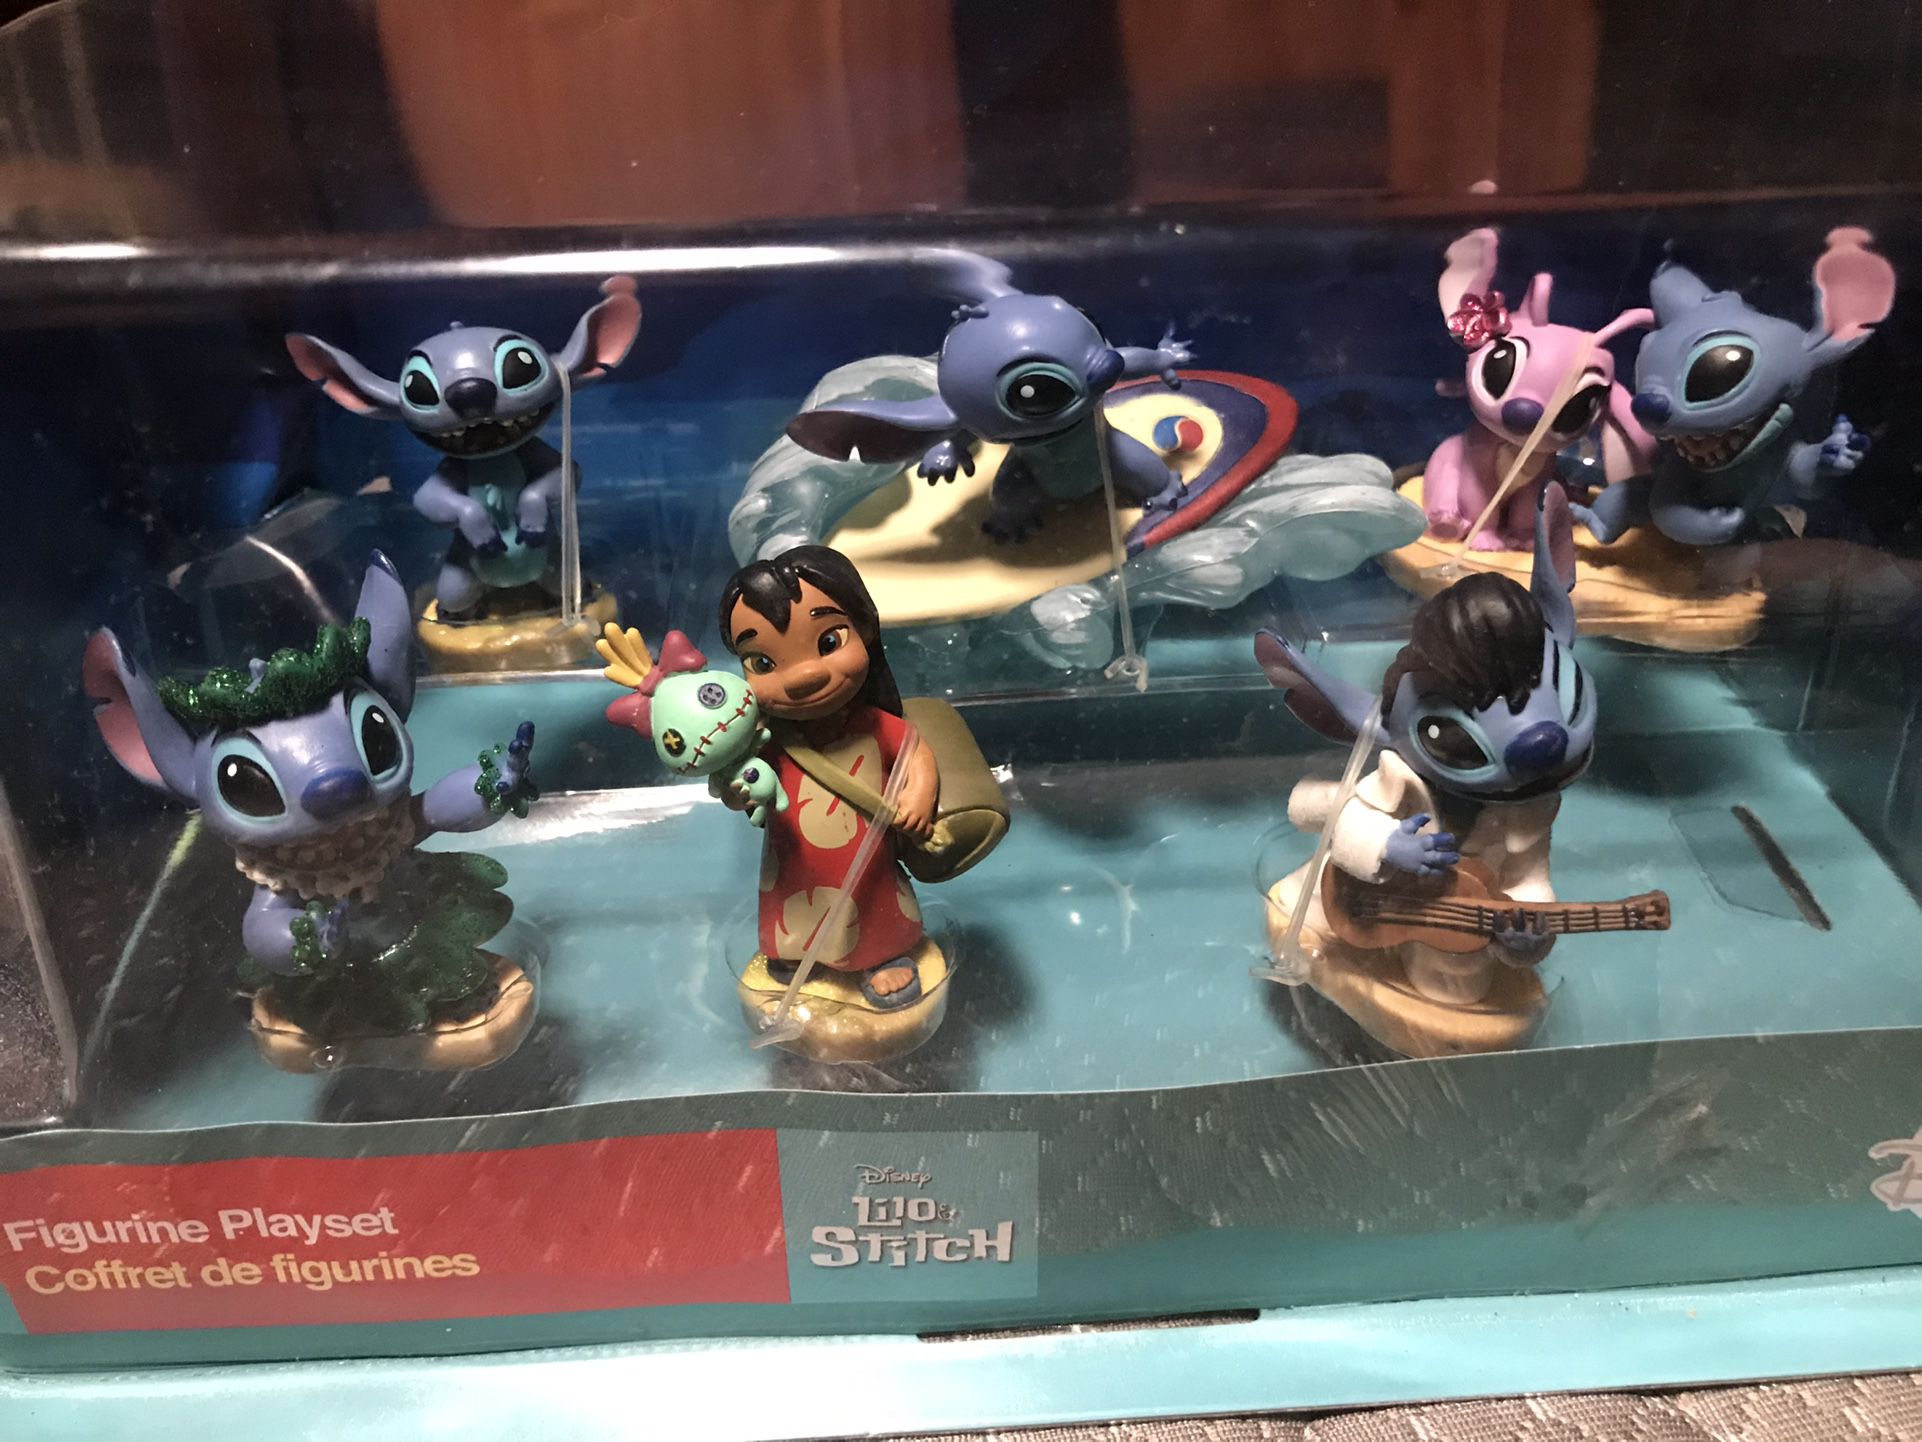 Original Disney Lilo & Stitch Figurine Play set